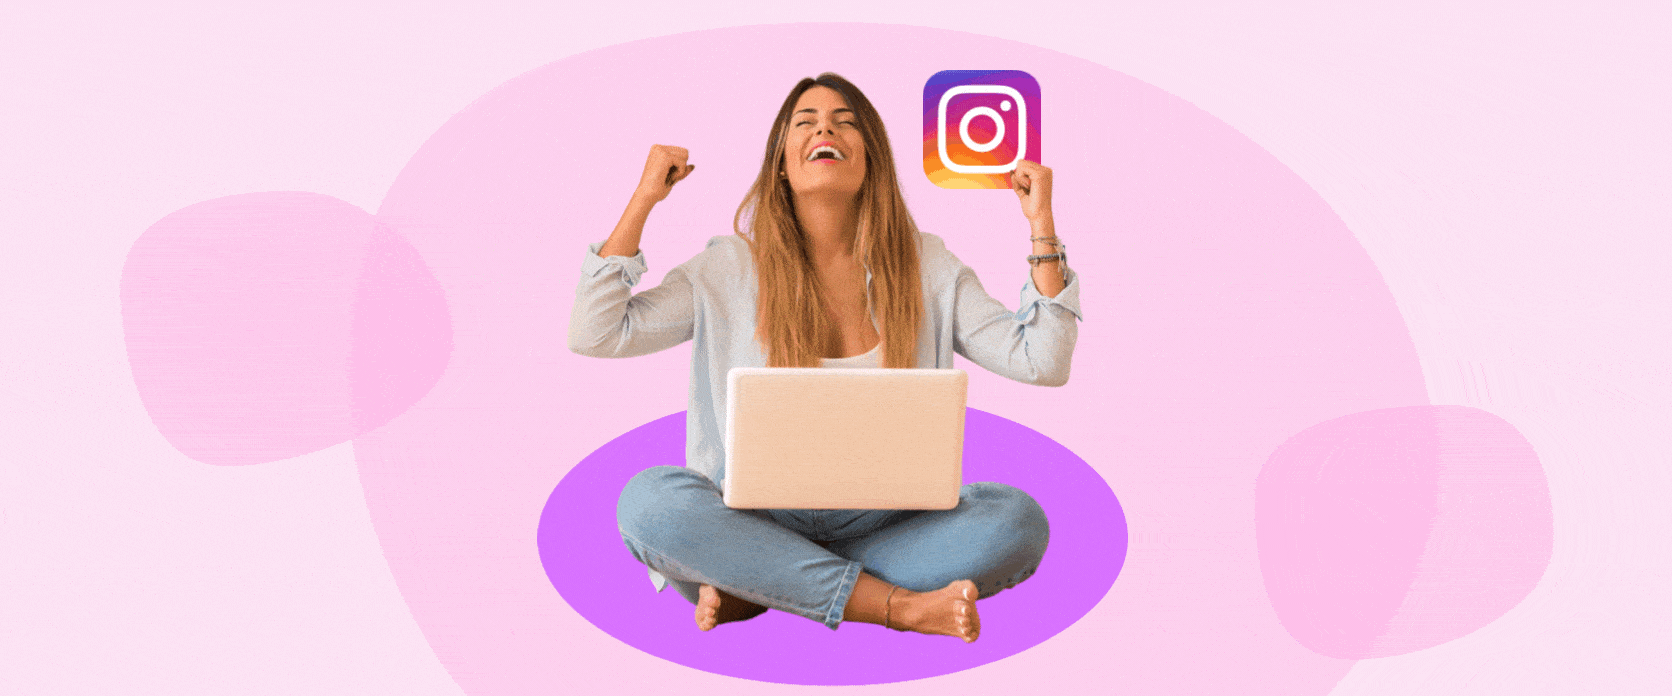 Instagram updates: Links for everyone & desktop publishing